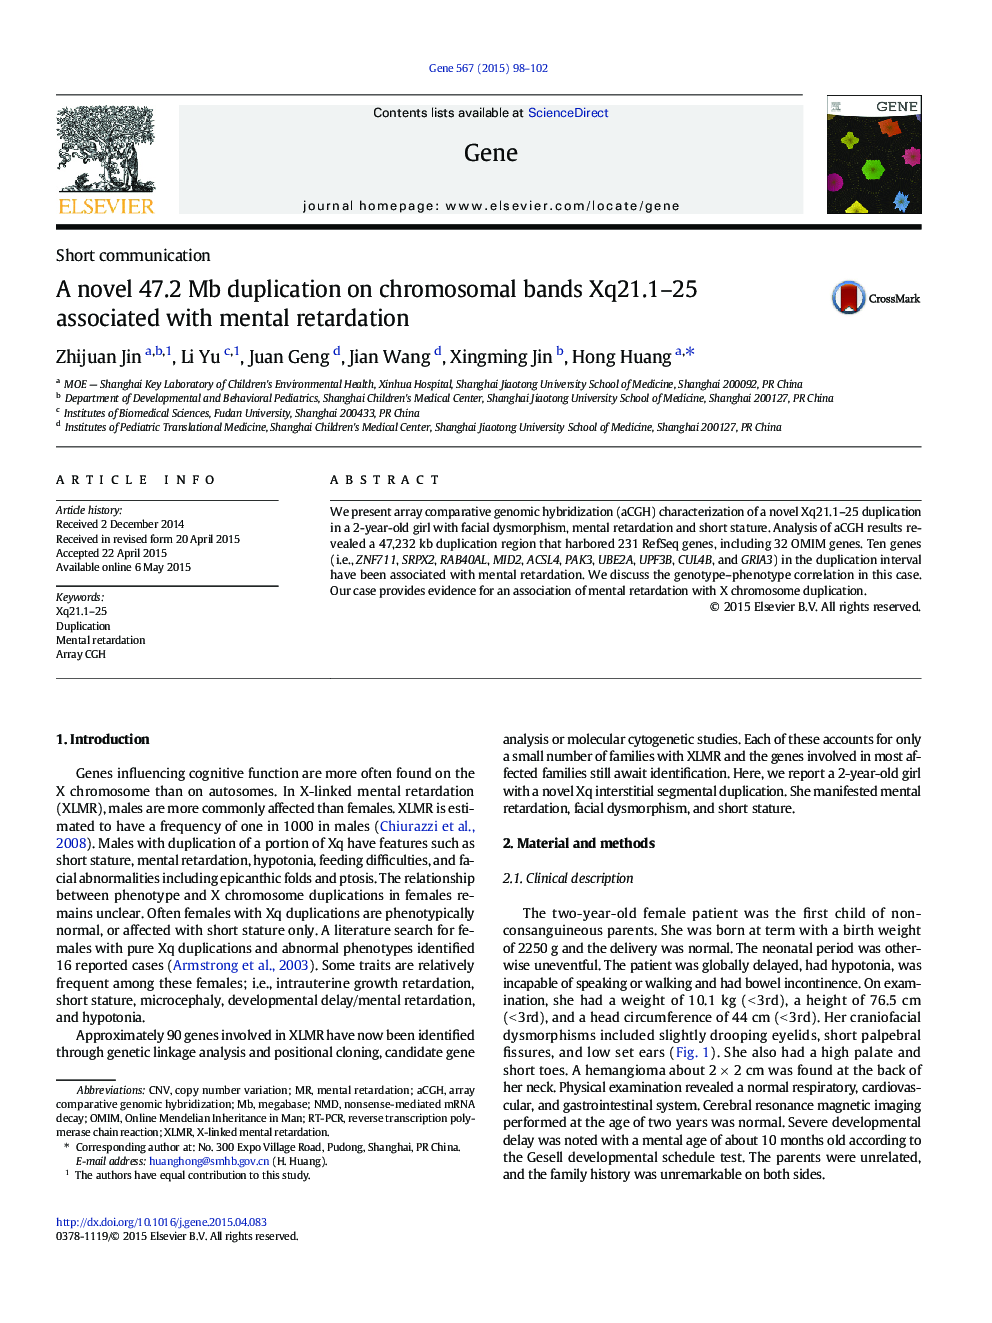 A novel 47.2 Mb duplication on chromosomal bands Xq21.1–25 associated with mental retardation